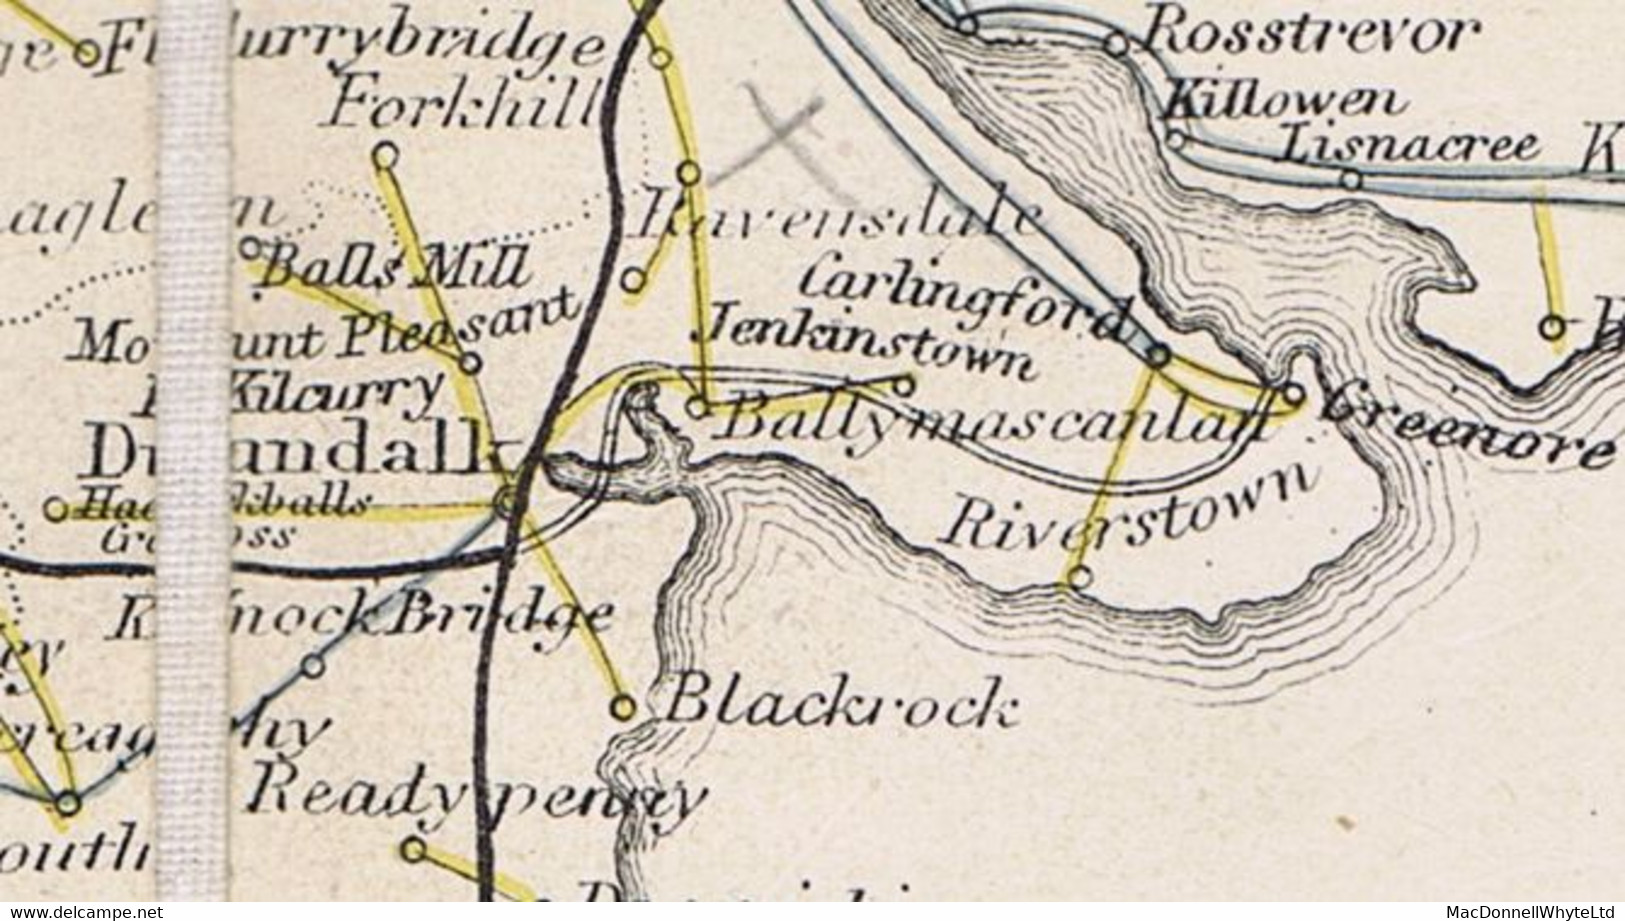 Ireland Louth Kilkenny 1820 Letter To Castlecomer With CARLINGFORD/60 Mileage, Octagonal MIDOUT, Missent - Préphilatélie